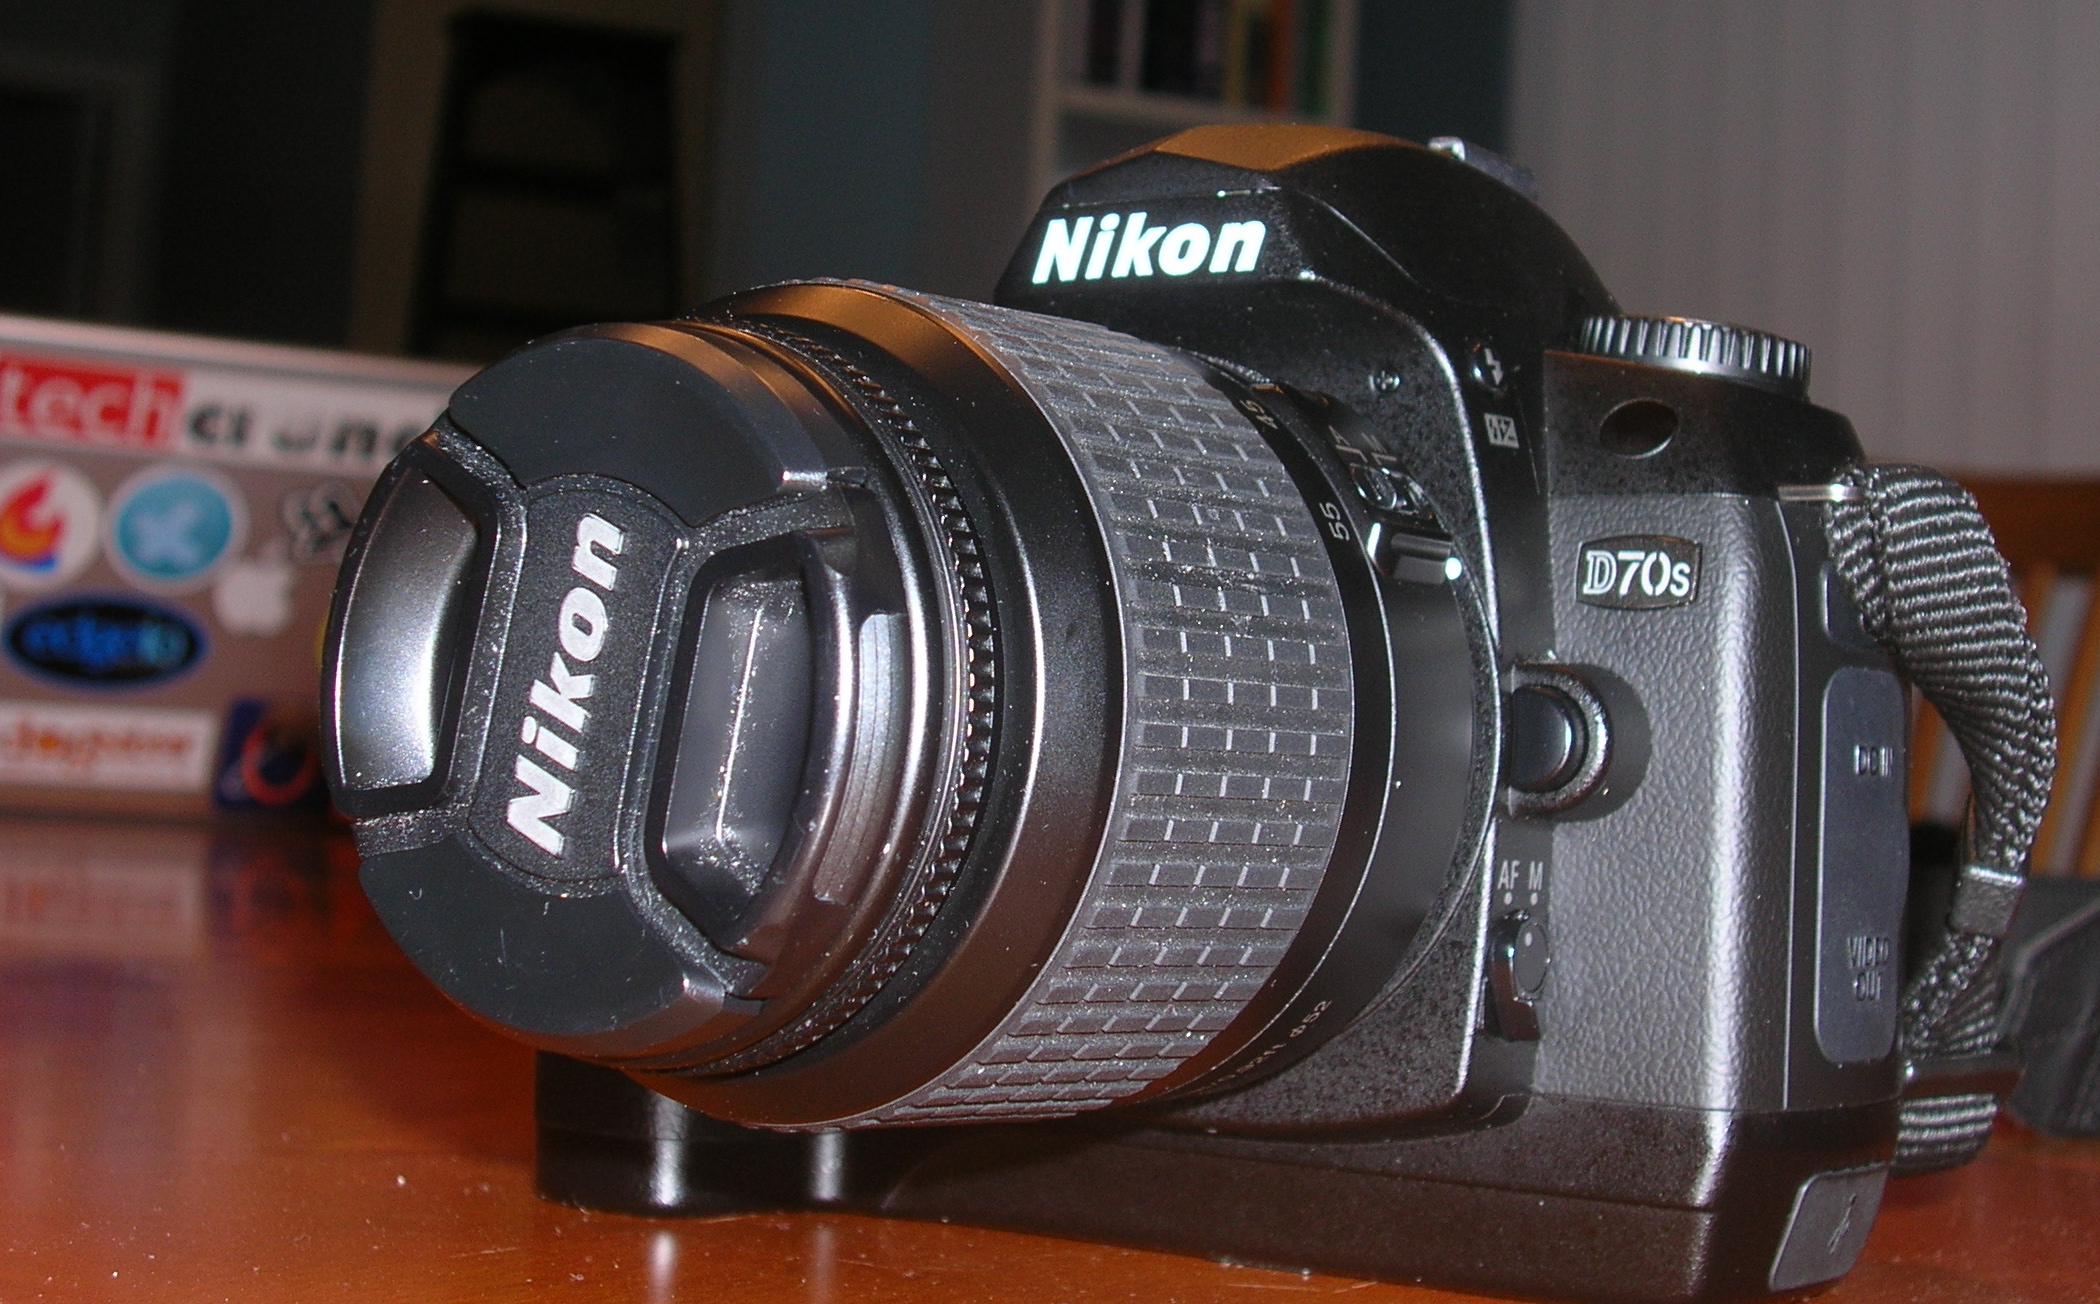 a nikon digital camera with its flash cap on